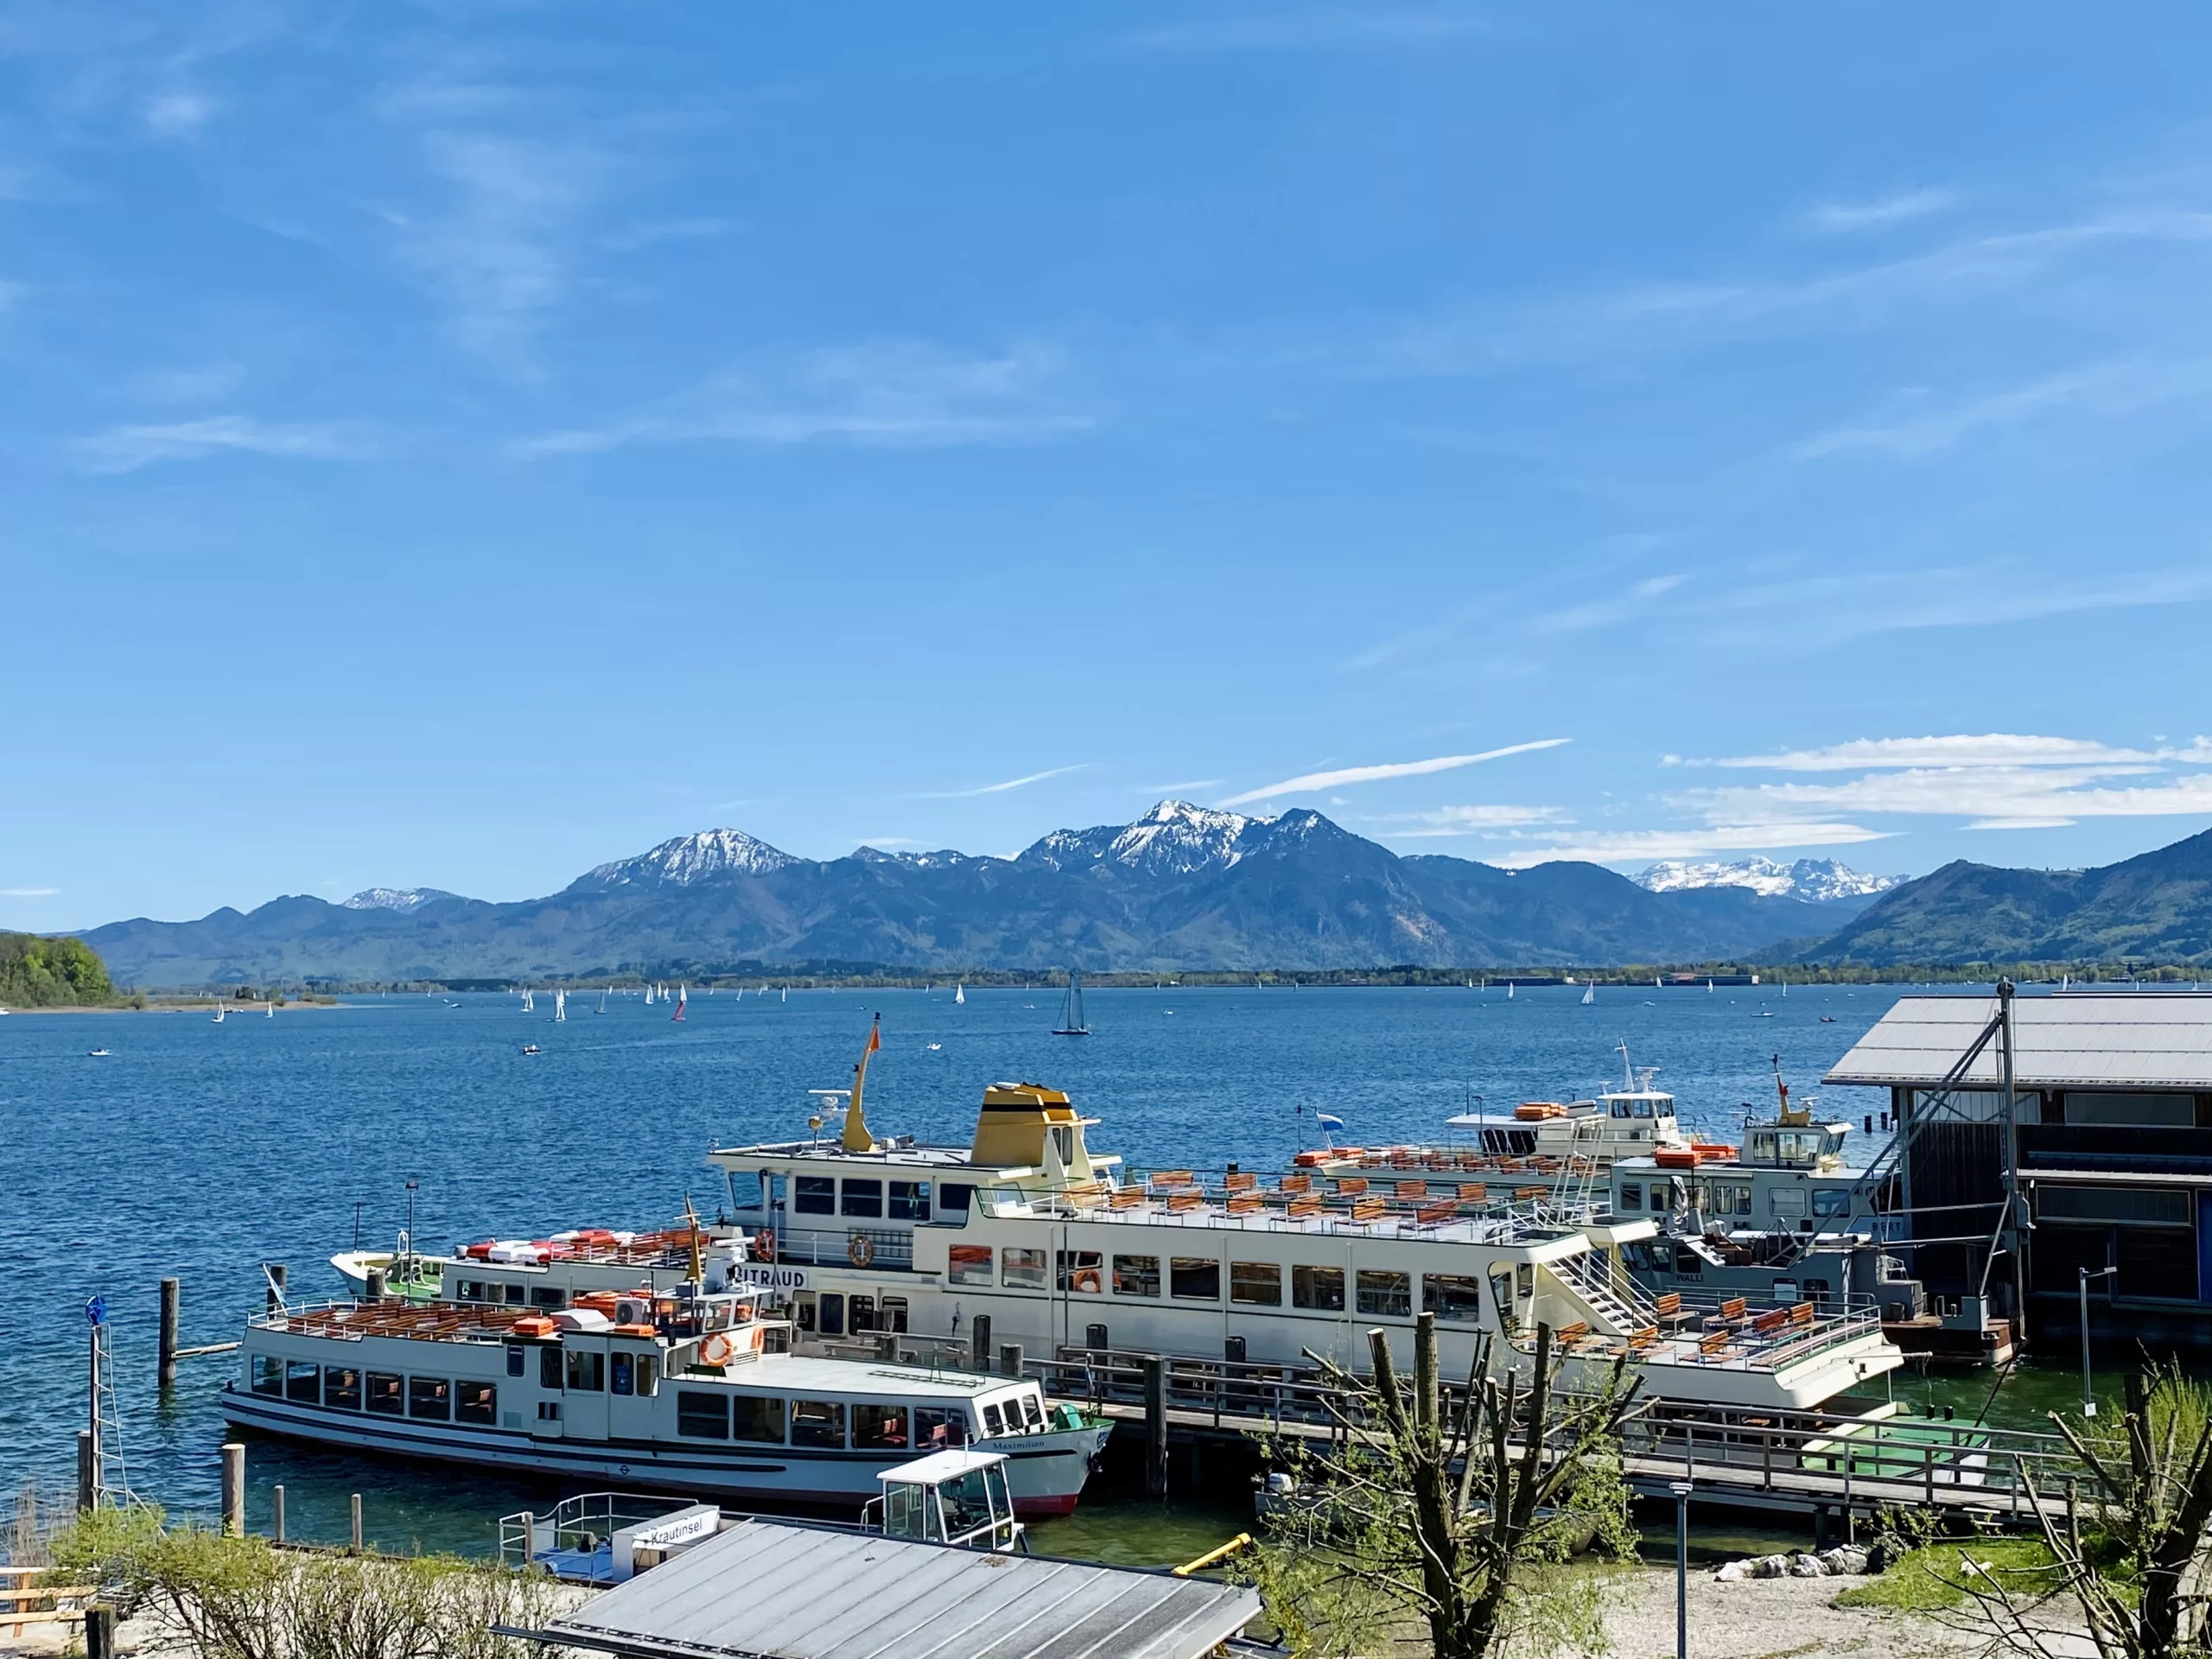 Travel to Beautiful Lake Chiemsee – The Bavarian Sea